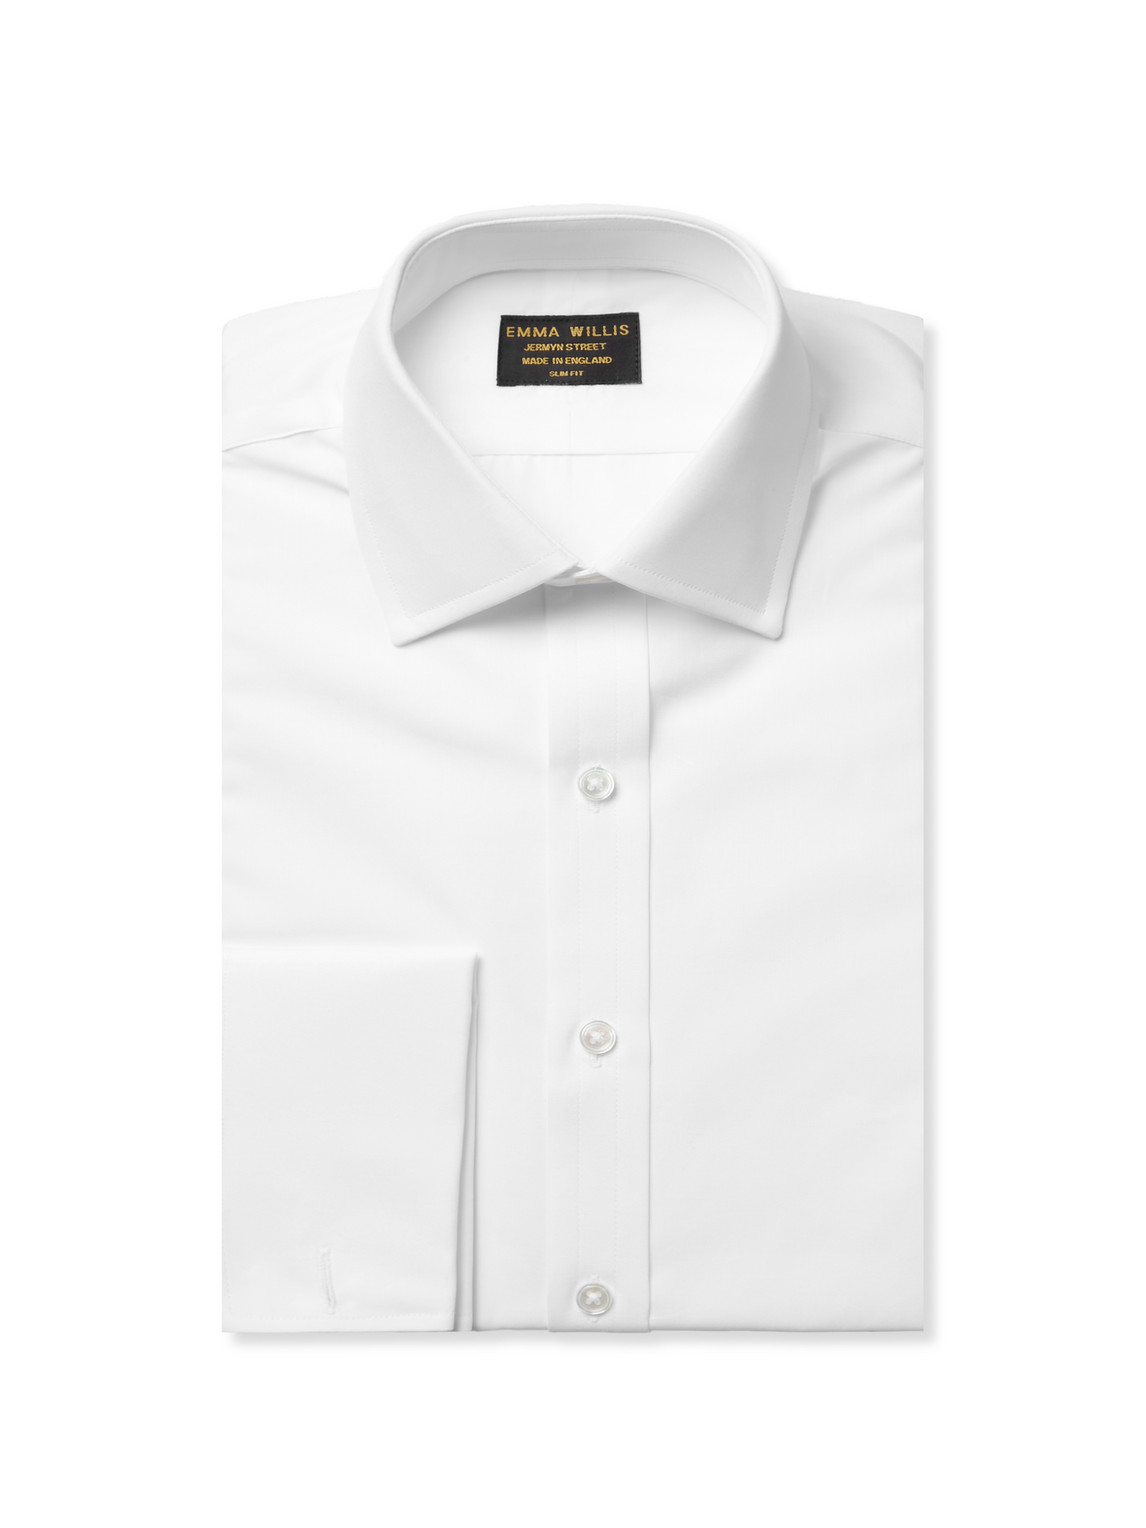 White Double-Cuff Cotton Shirt